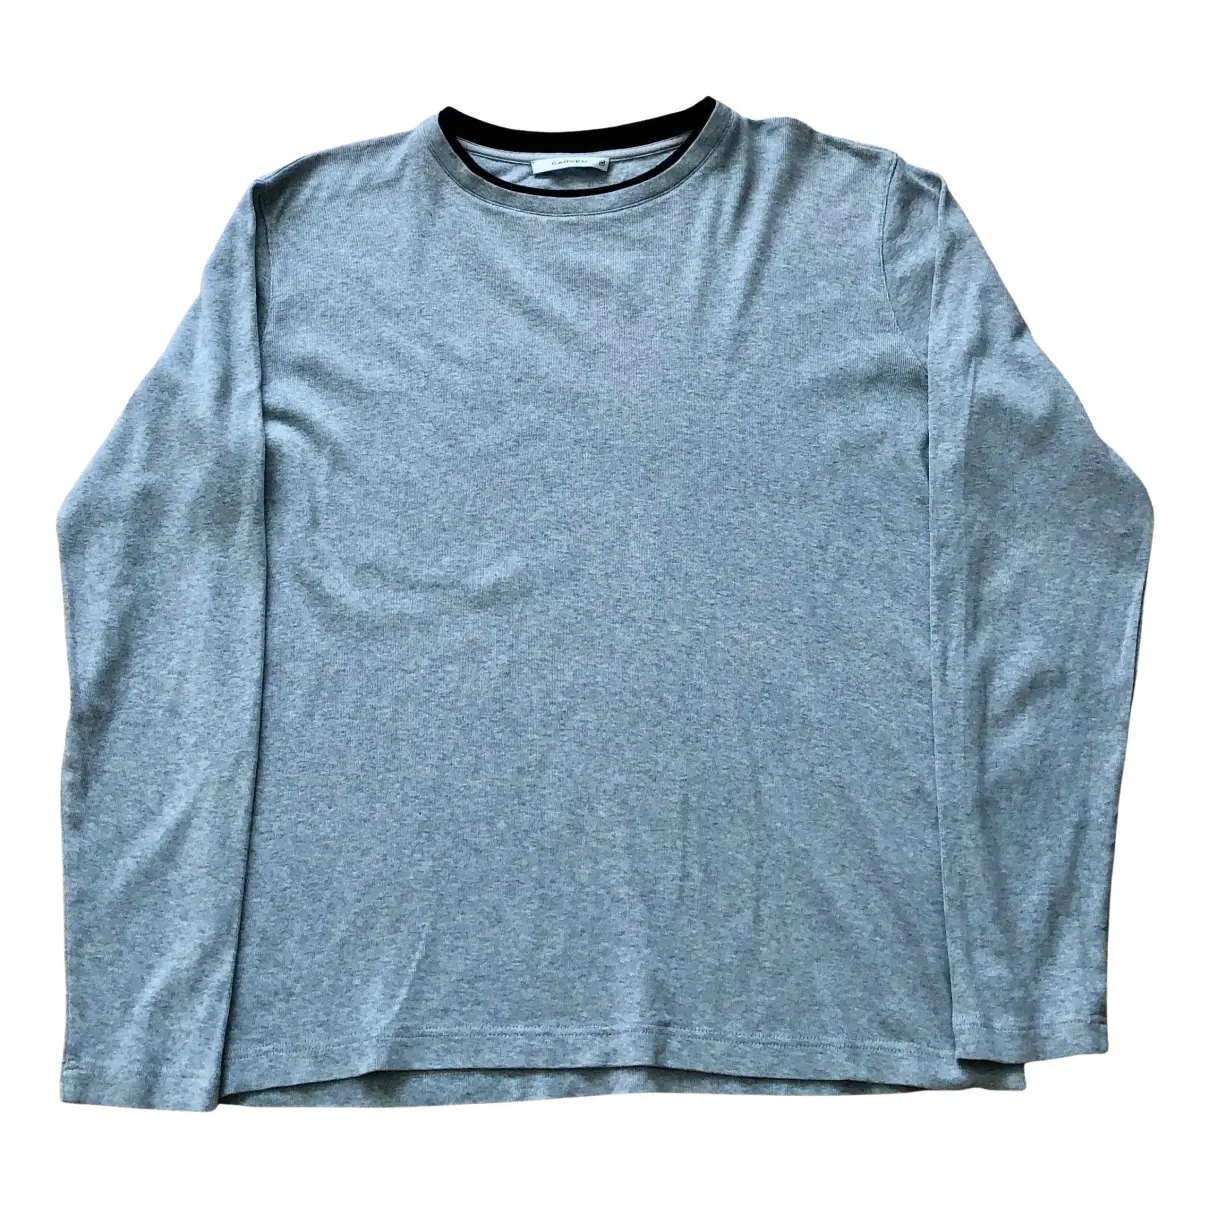 T-shirt Carven Grey size M International in Cotton - 26842539